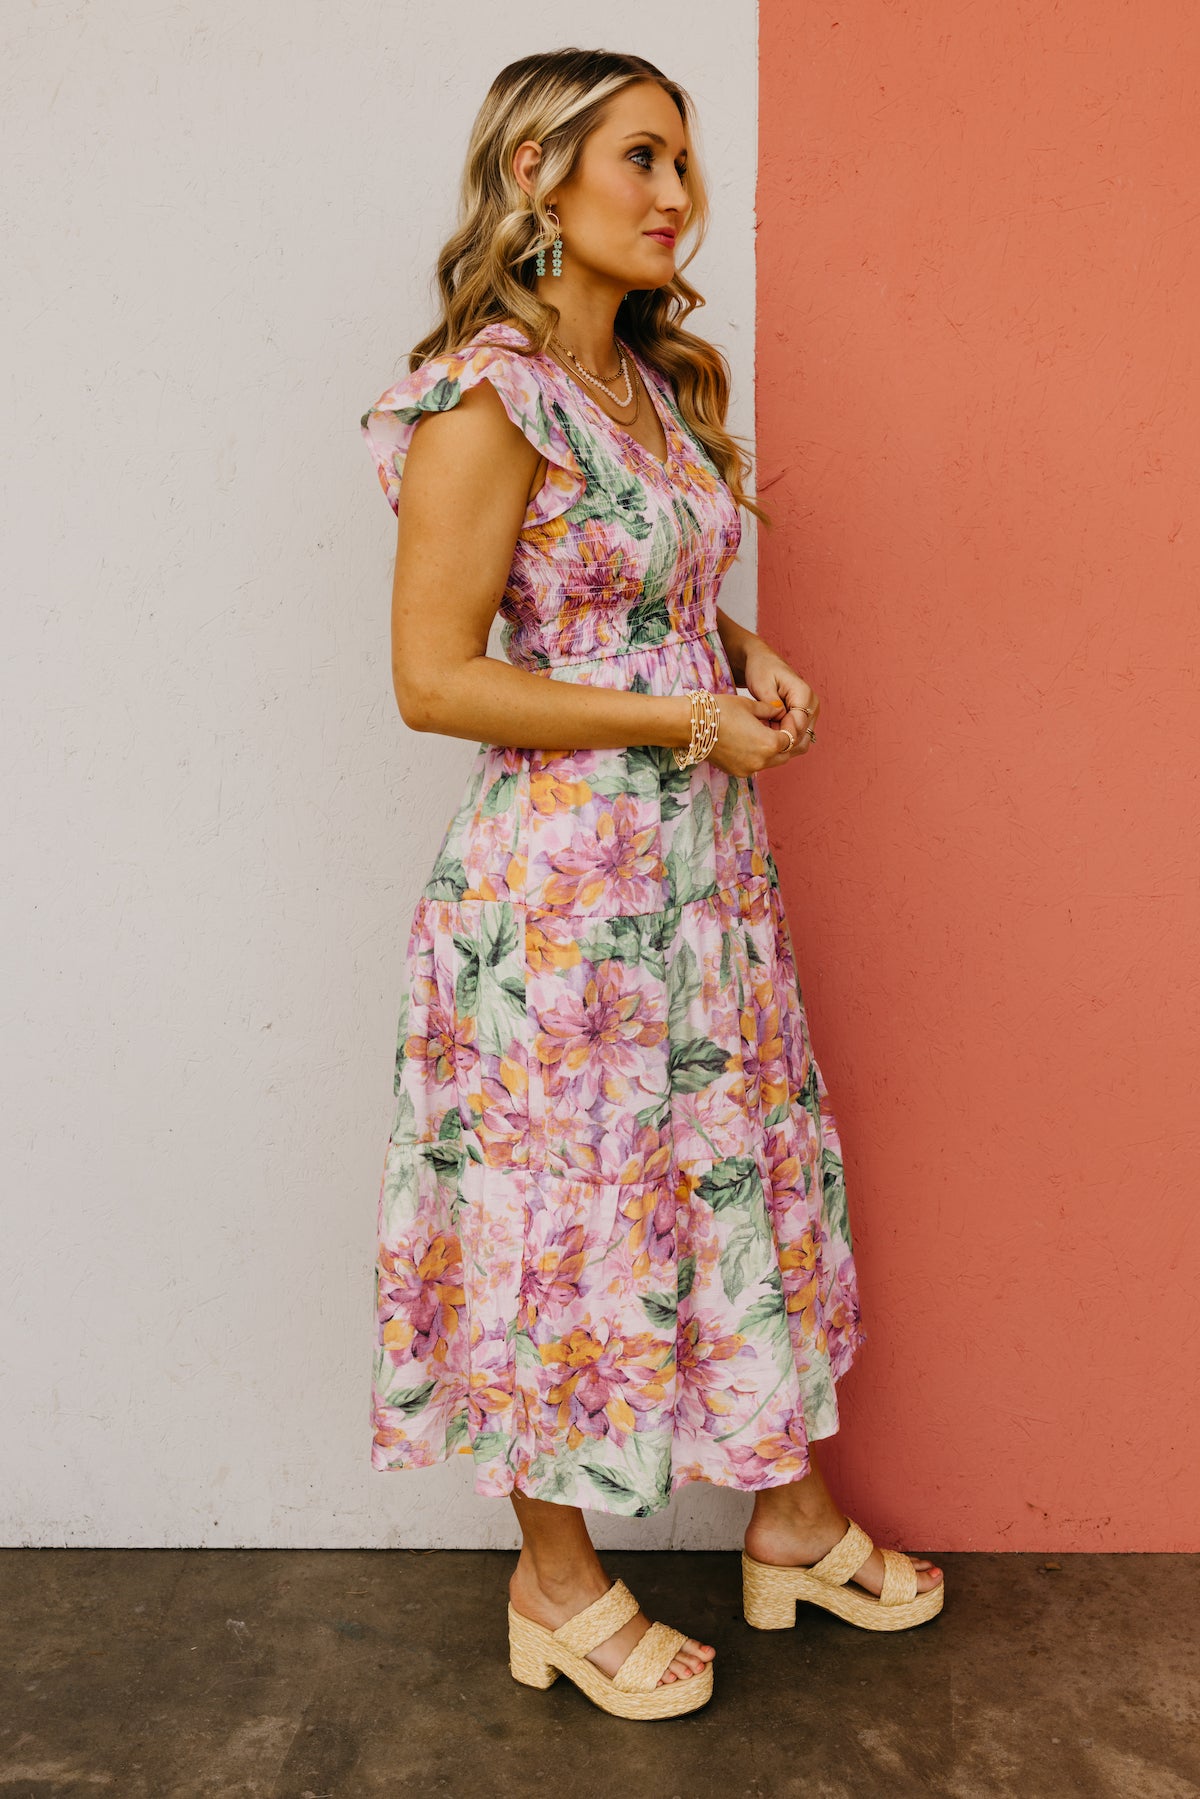 The McKenzie Watercolor Floral Midi Dress